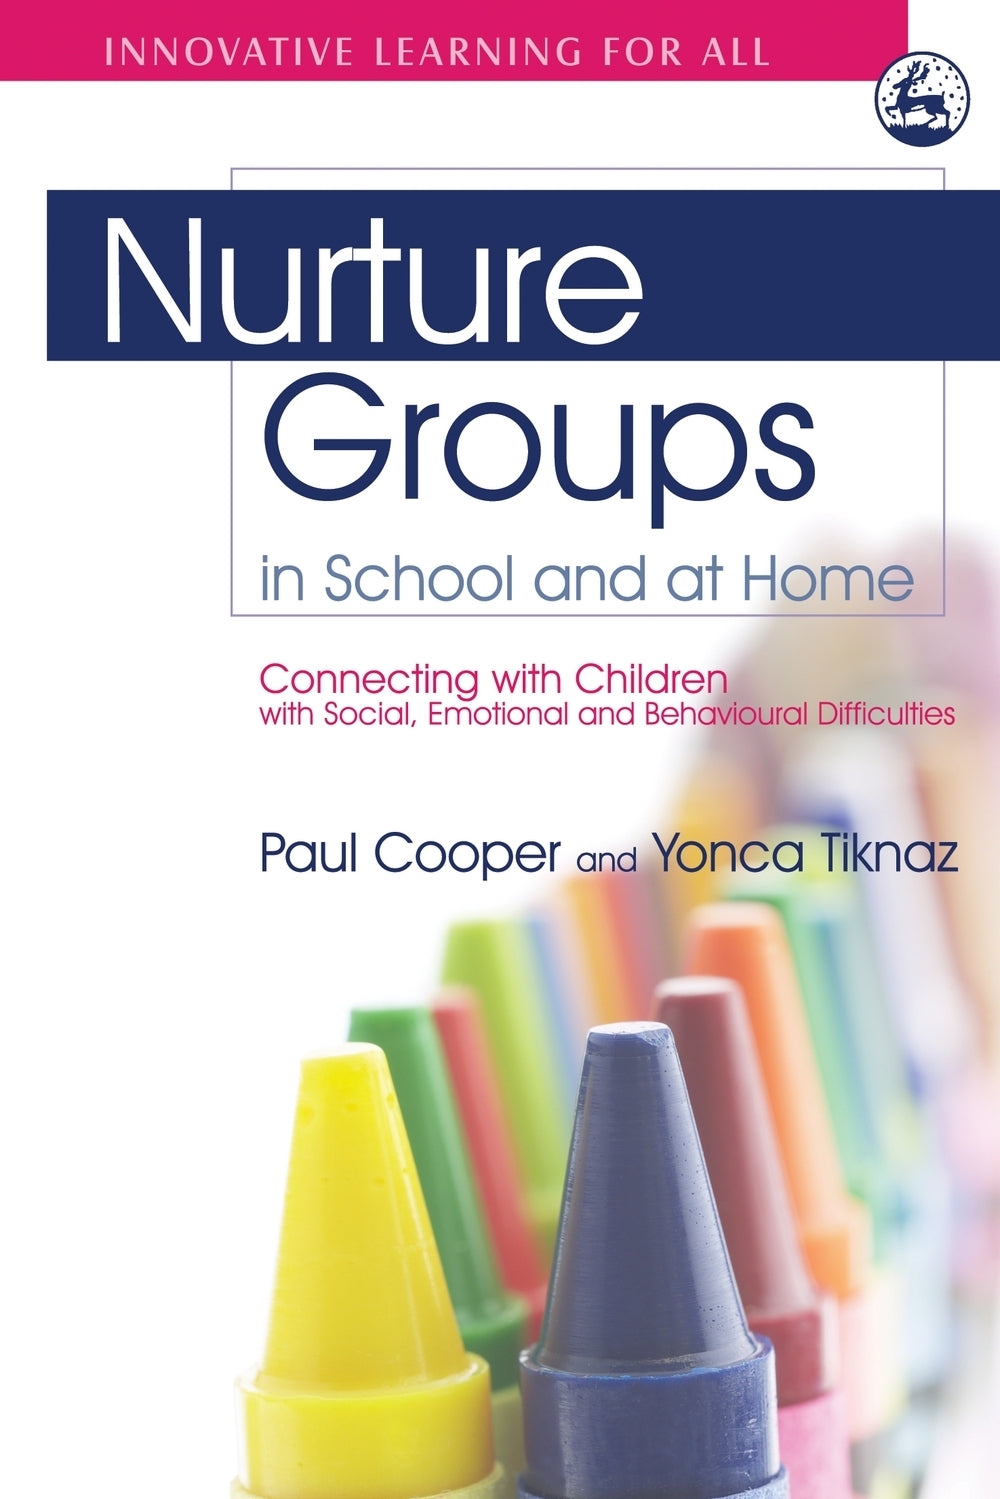 Nurture Groups in School and at Home by Paul Cooper, Yonca Tiknaz